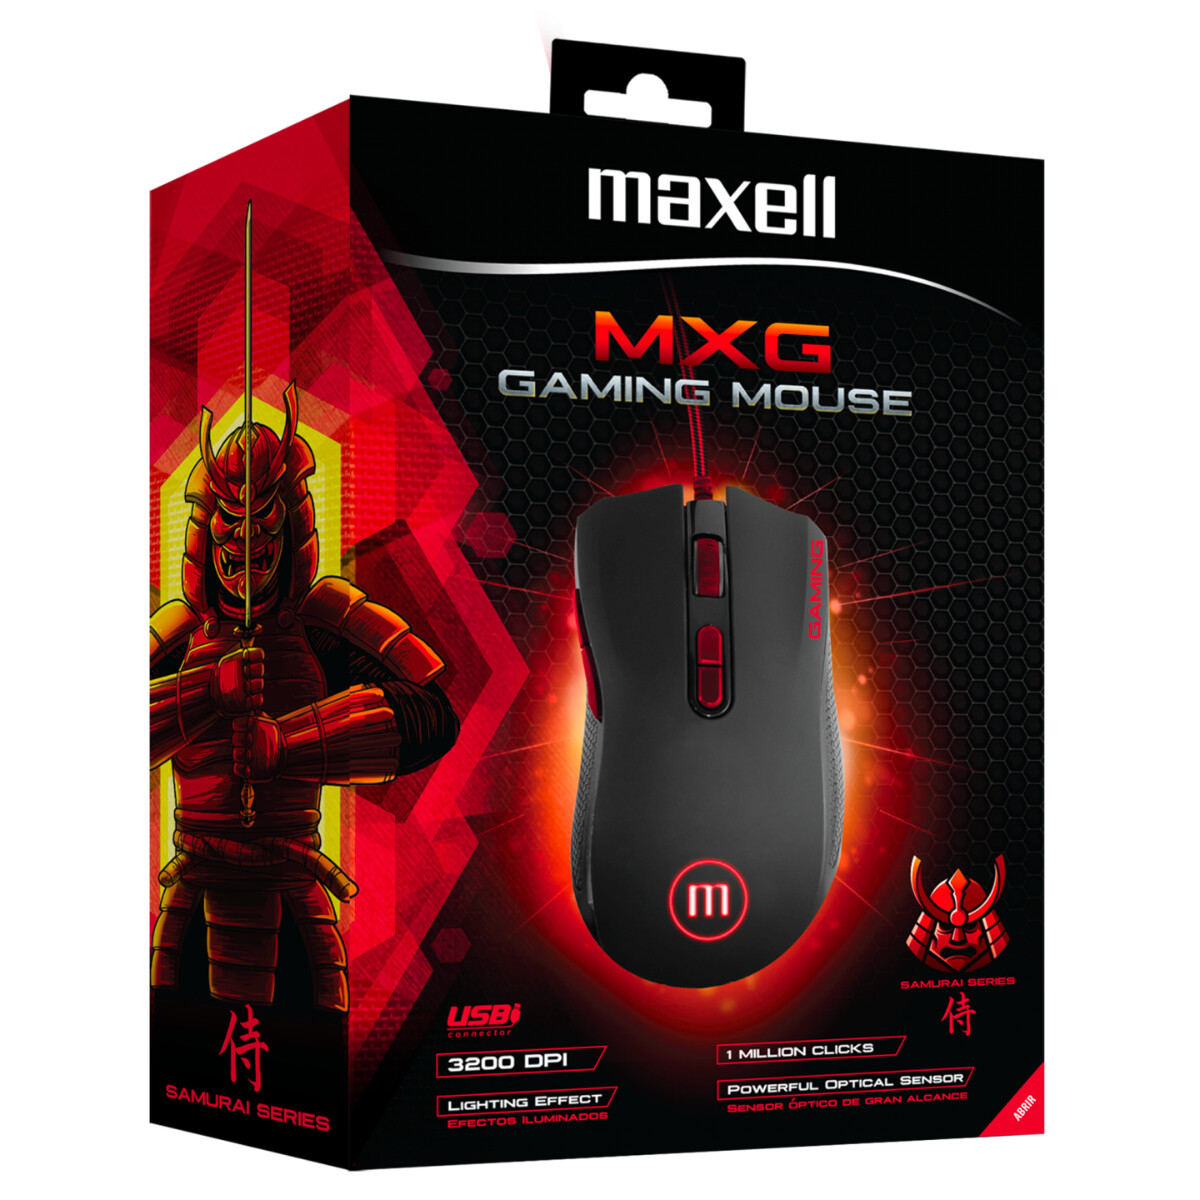 Mouse gaming mxg maxell samurai series Black